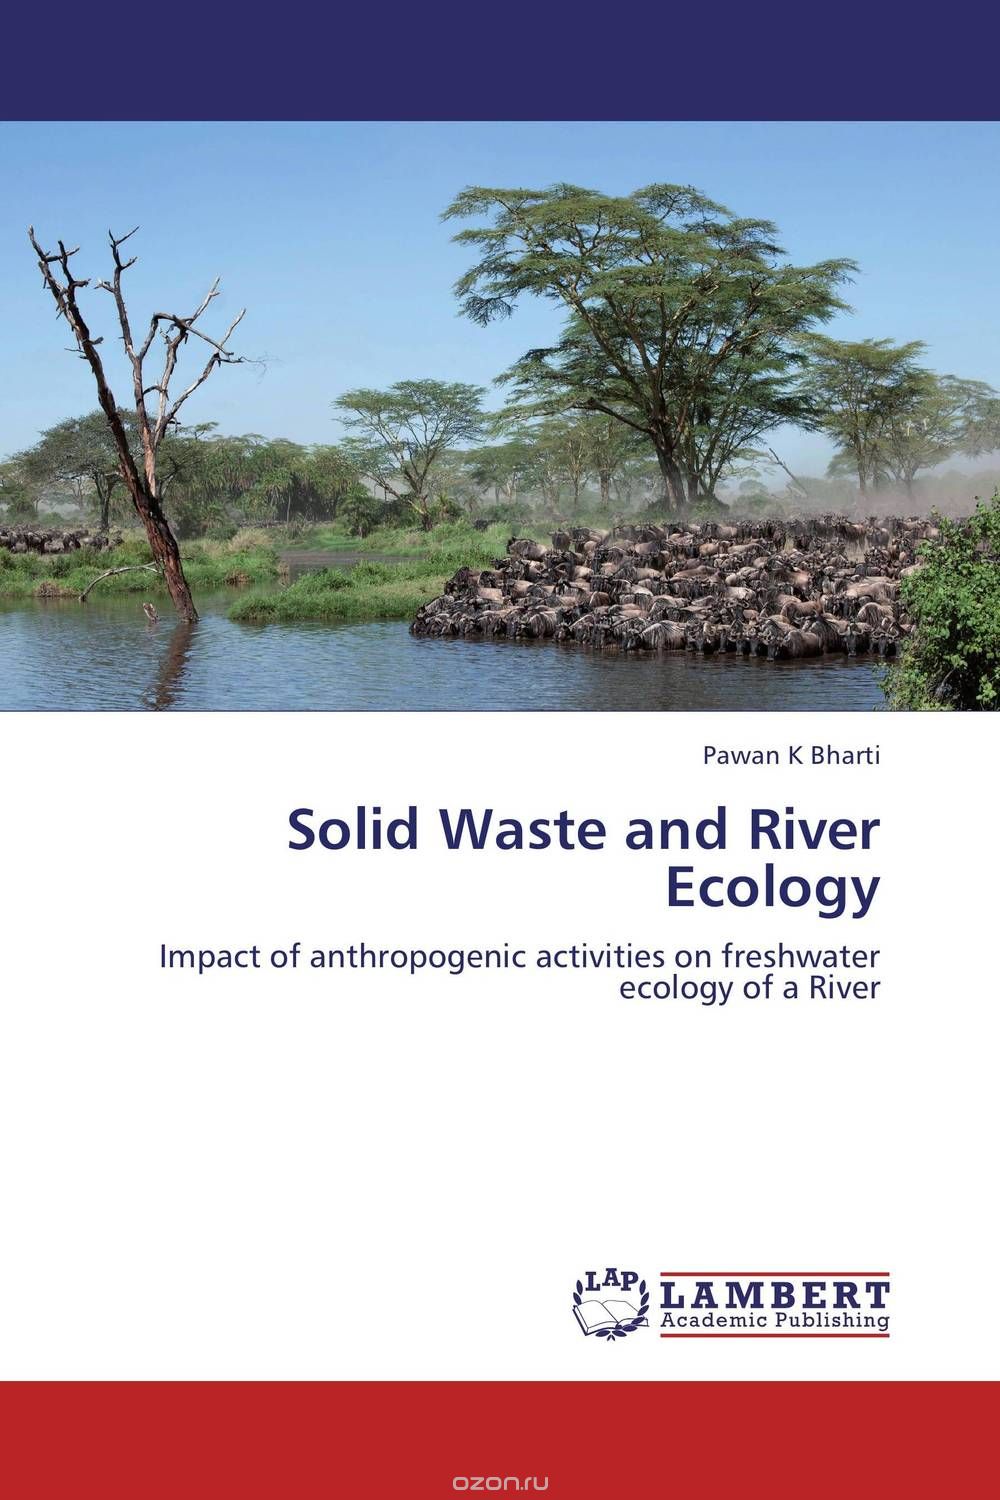 Скачать книгу "Solid Waste and River Ecology"